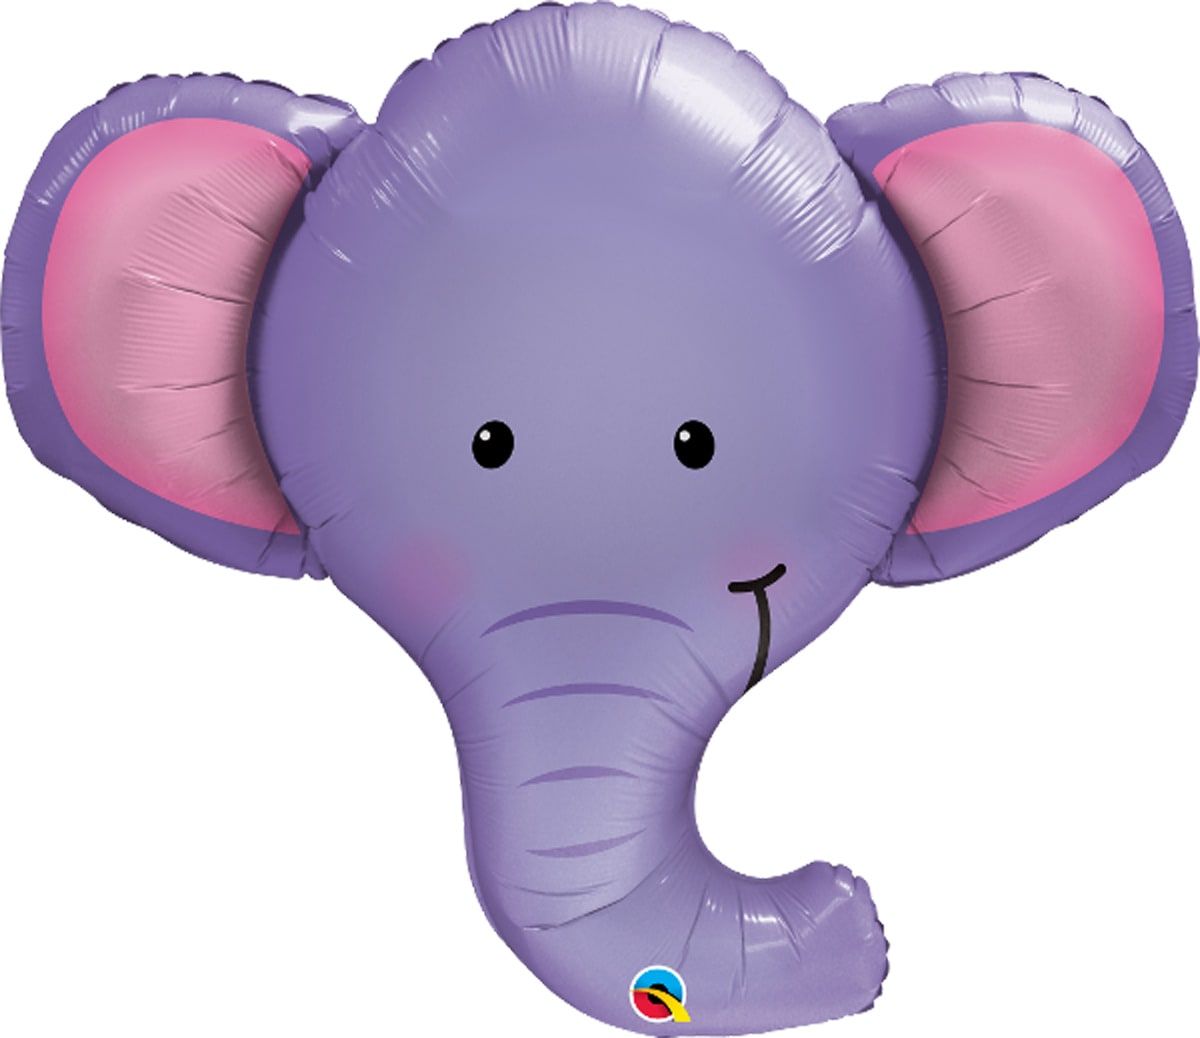 Folieballon olifant vorm paars